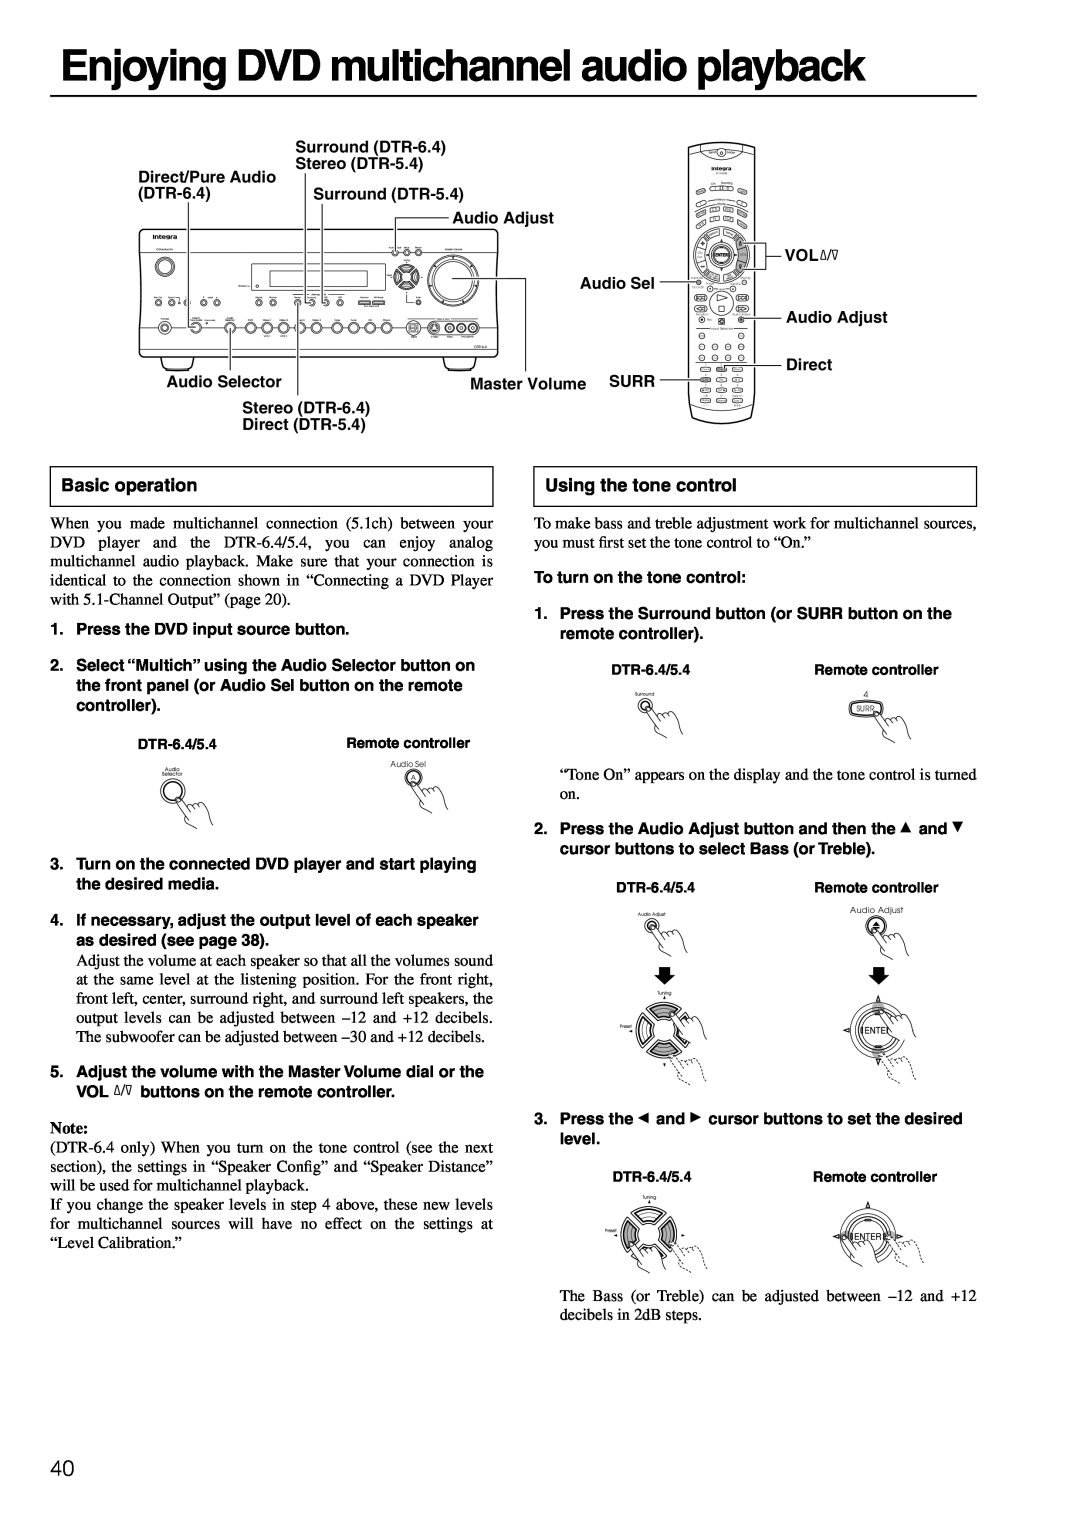 Integra DTR-6.4/5.4 instruction manual Enjoying DVD multichannel audio playback, Using the tone control, Basic operation 